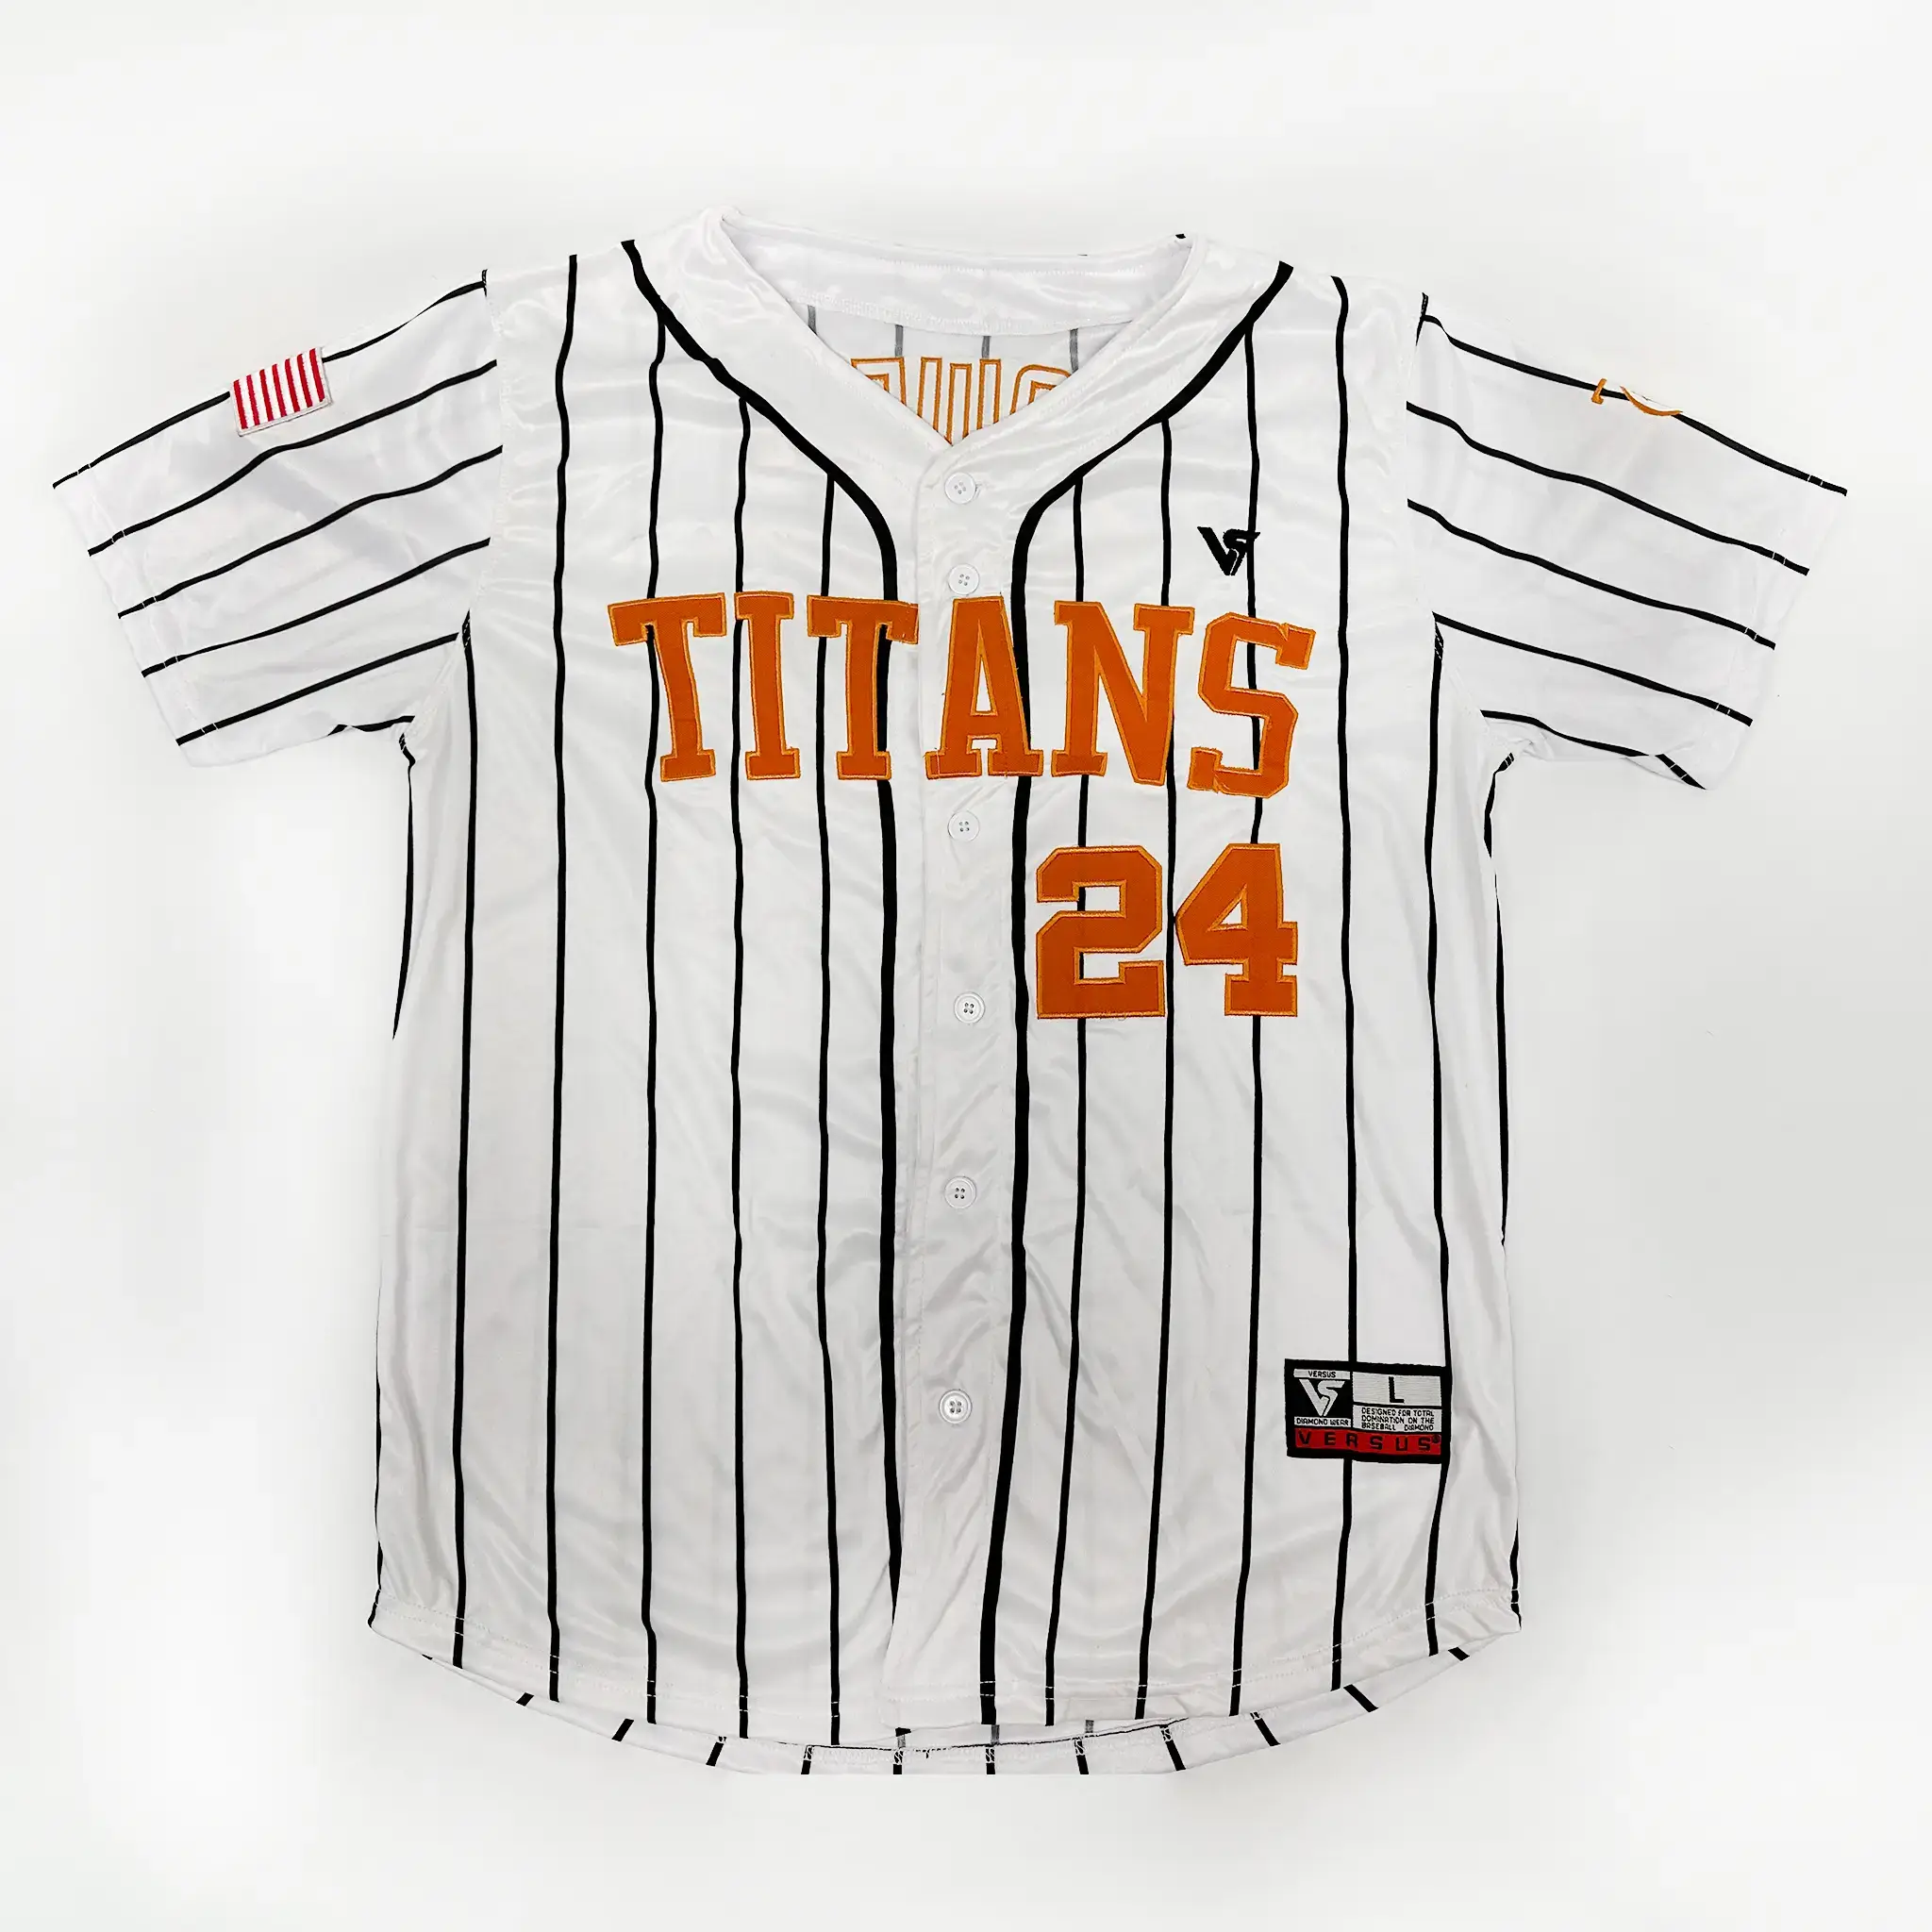 White Titans Baseball Jersey